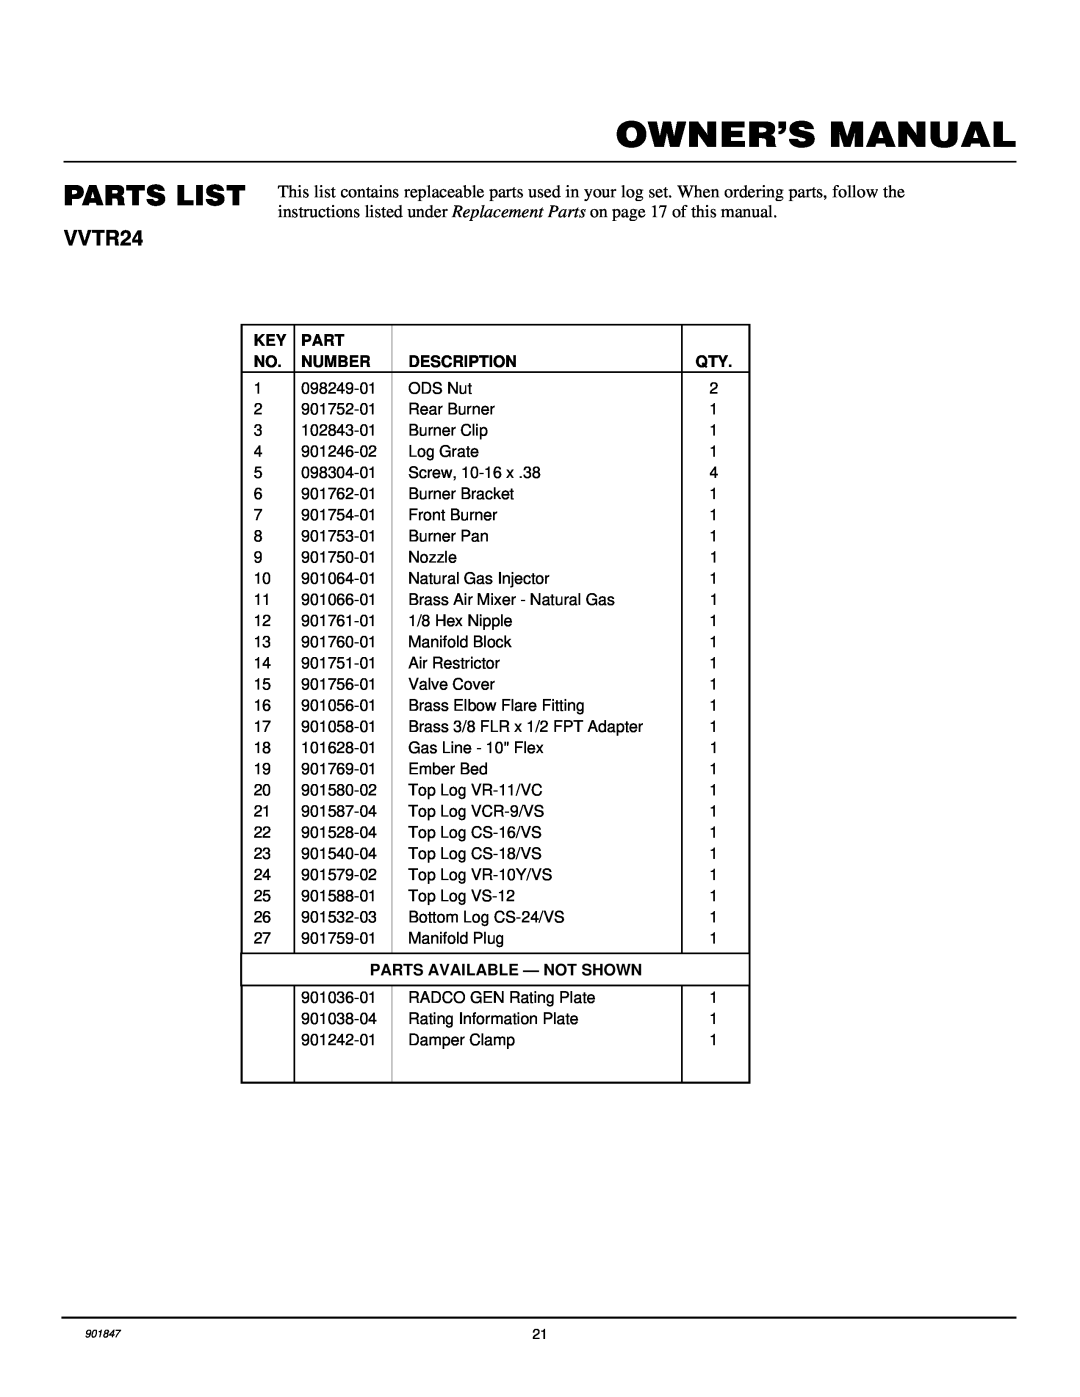 Desa VVTR18, VVTR24 installation manual Owner’S Manual, Parts List, Number, Description, Parts Available - Not Shown 